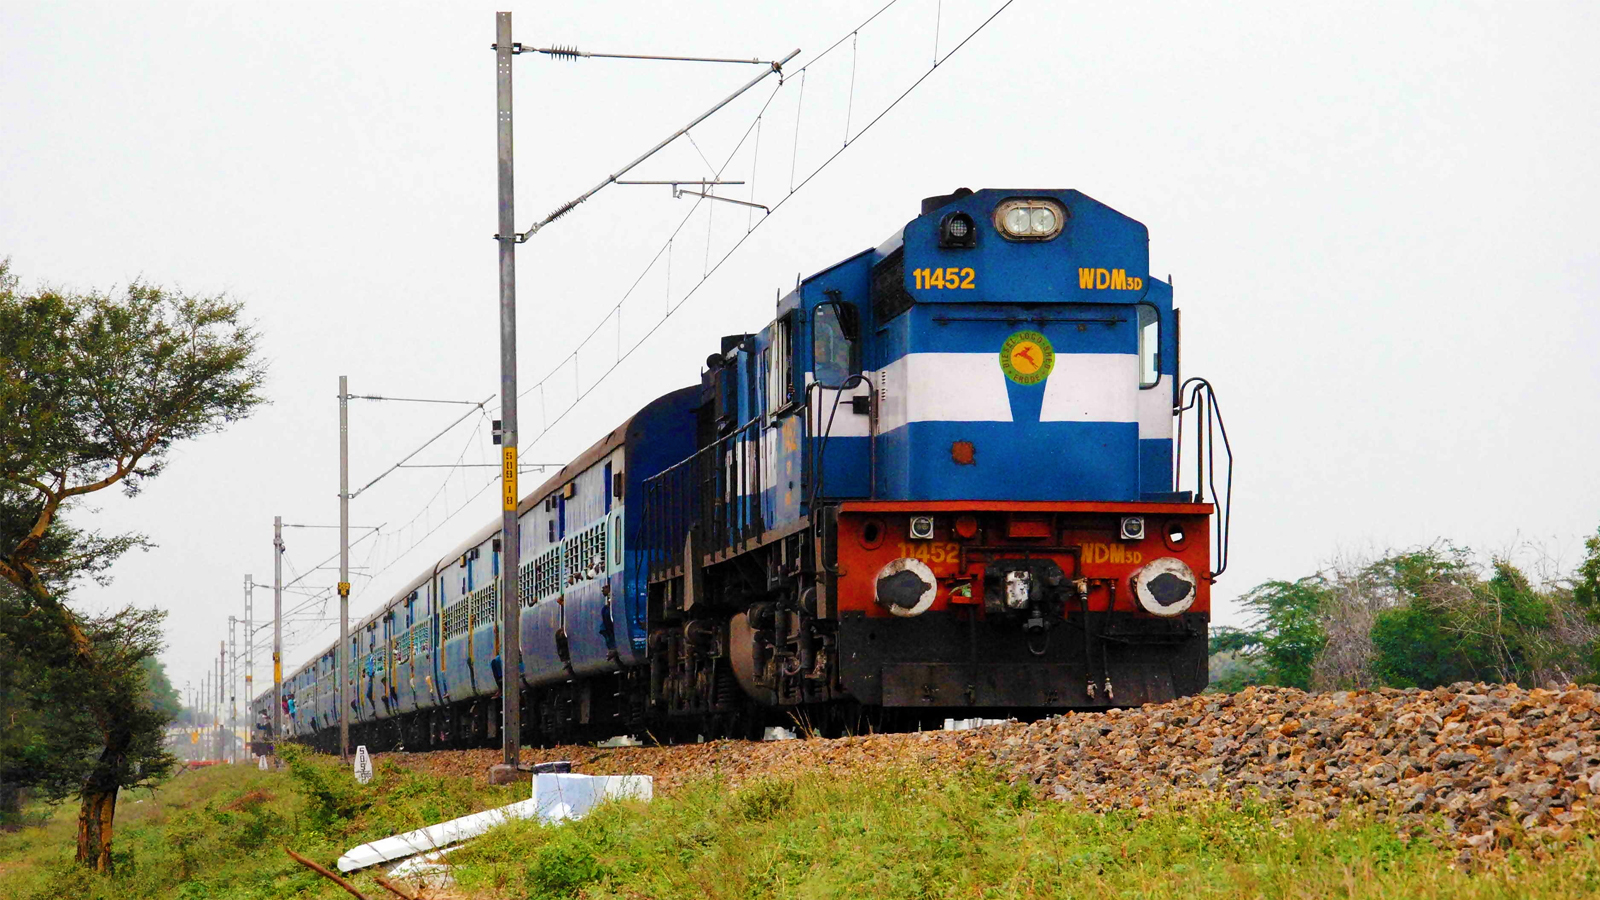 Indian Railways Rules